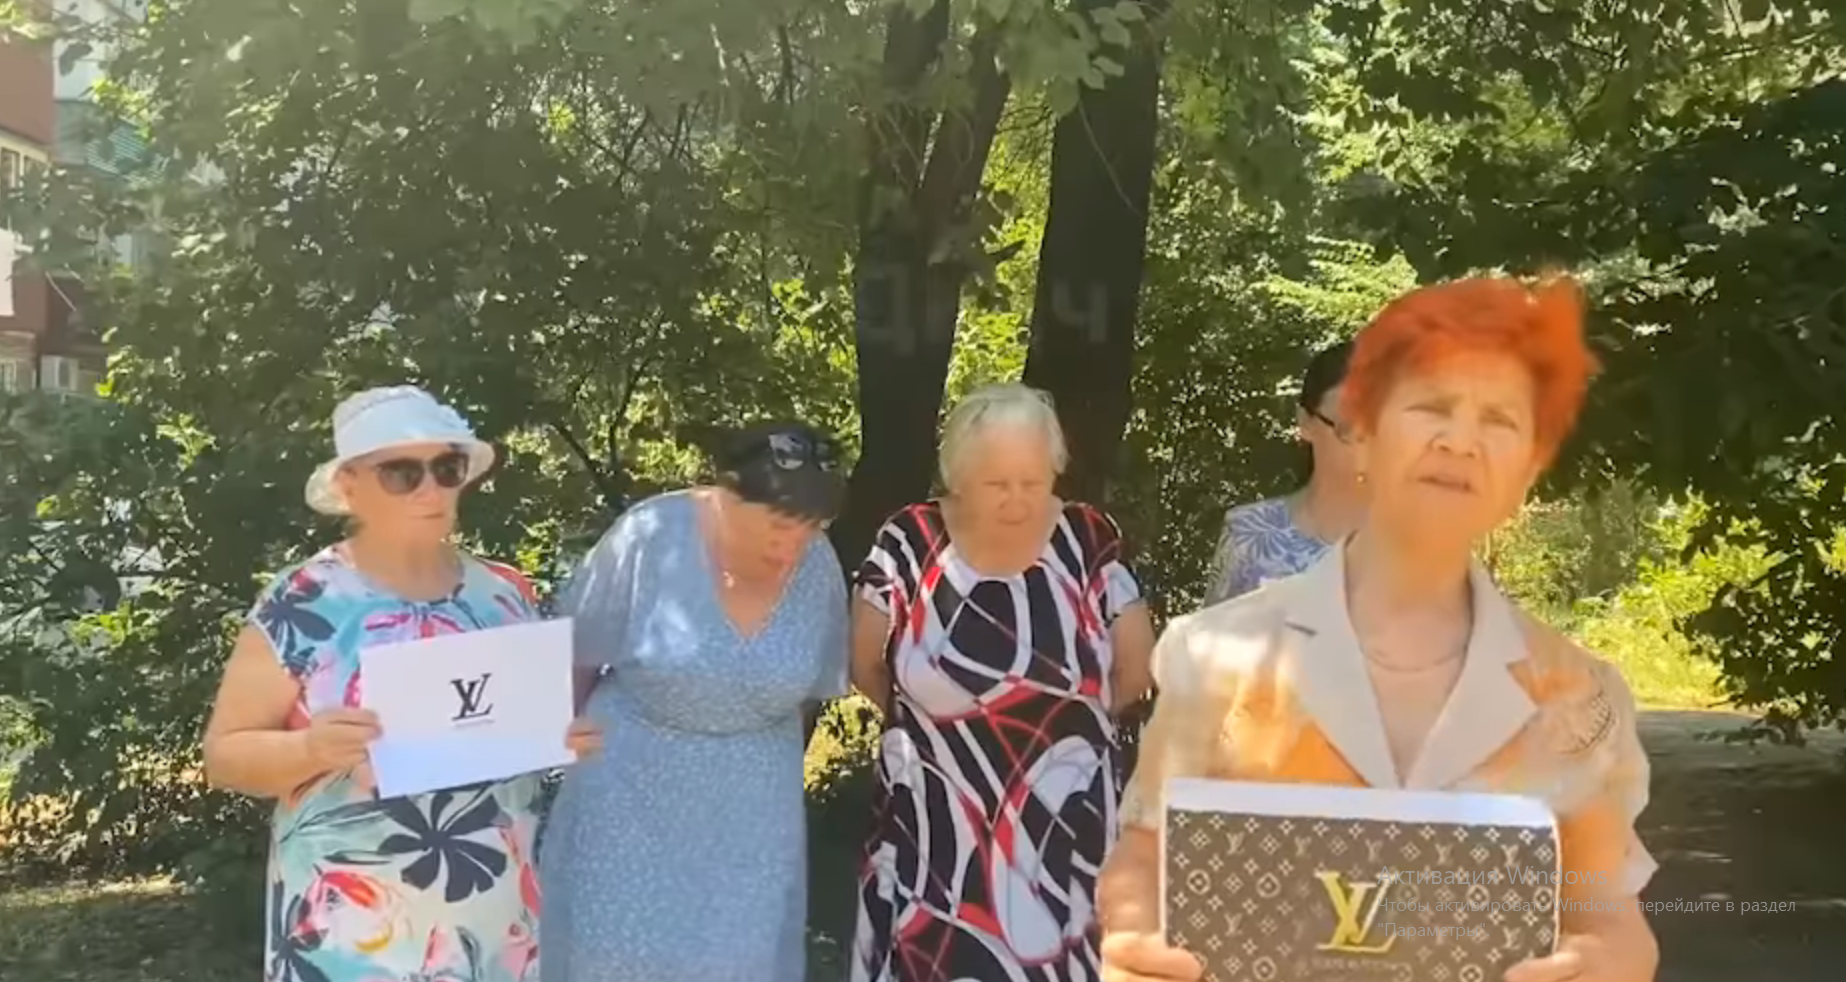 Видео дня: бабули из «Отрядов Путина» жгут символику модного люксового бренда